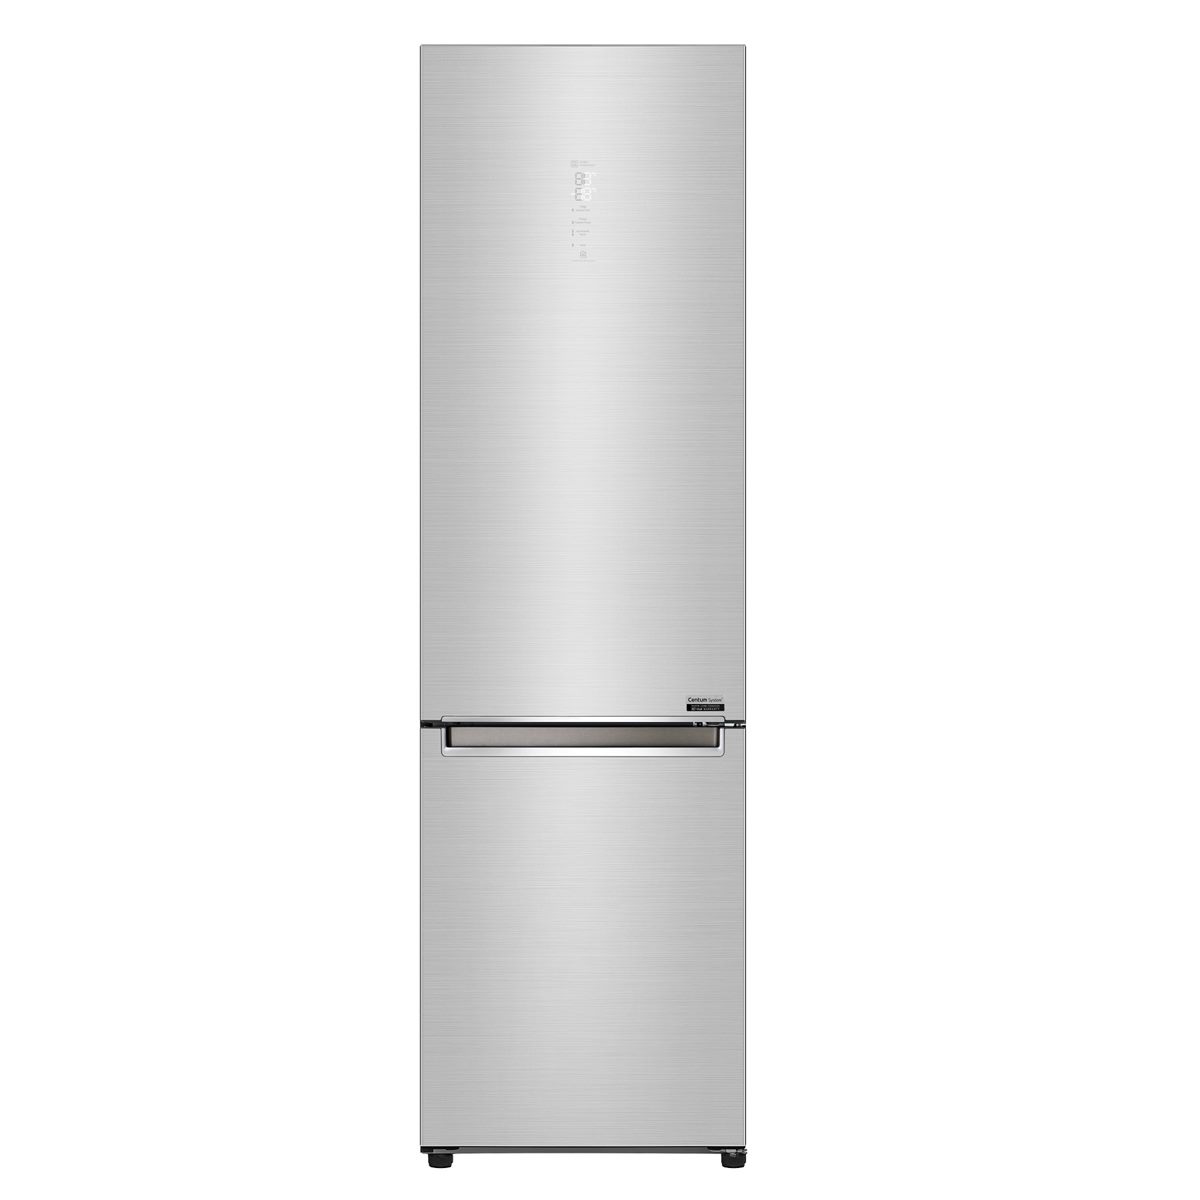 Bild_LG_Centum Refrigerator Stainless Steel